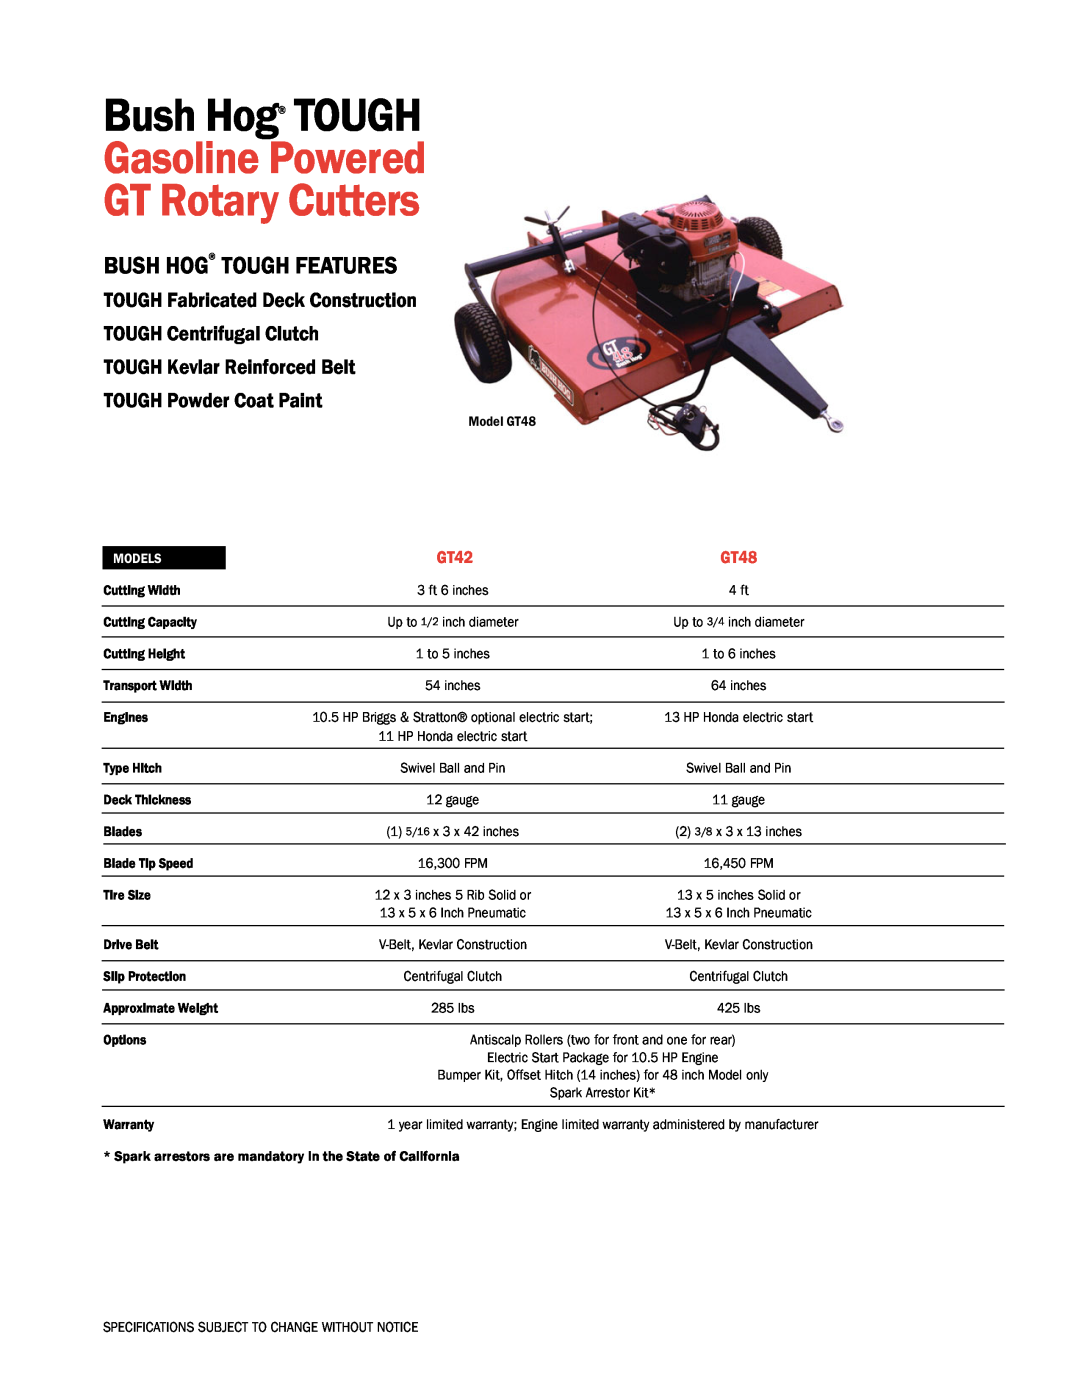 Bush Hog GT42 specifications Gasoline Powered GT Rotary Cutters, Bush Hog TOUGH Features, TOUGH Centrifugal Clutch 